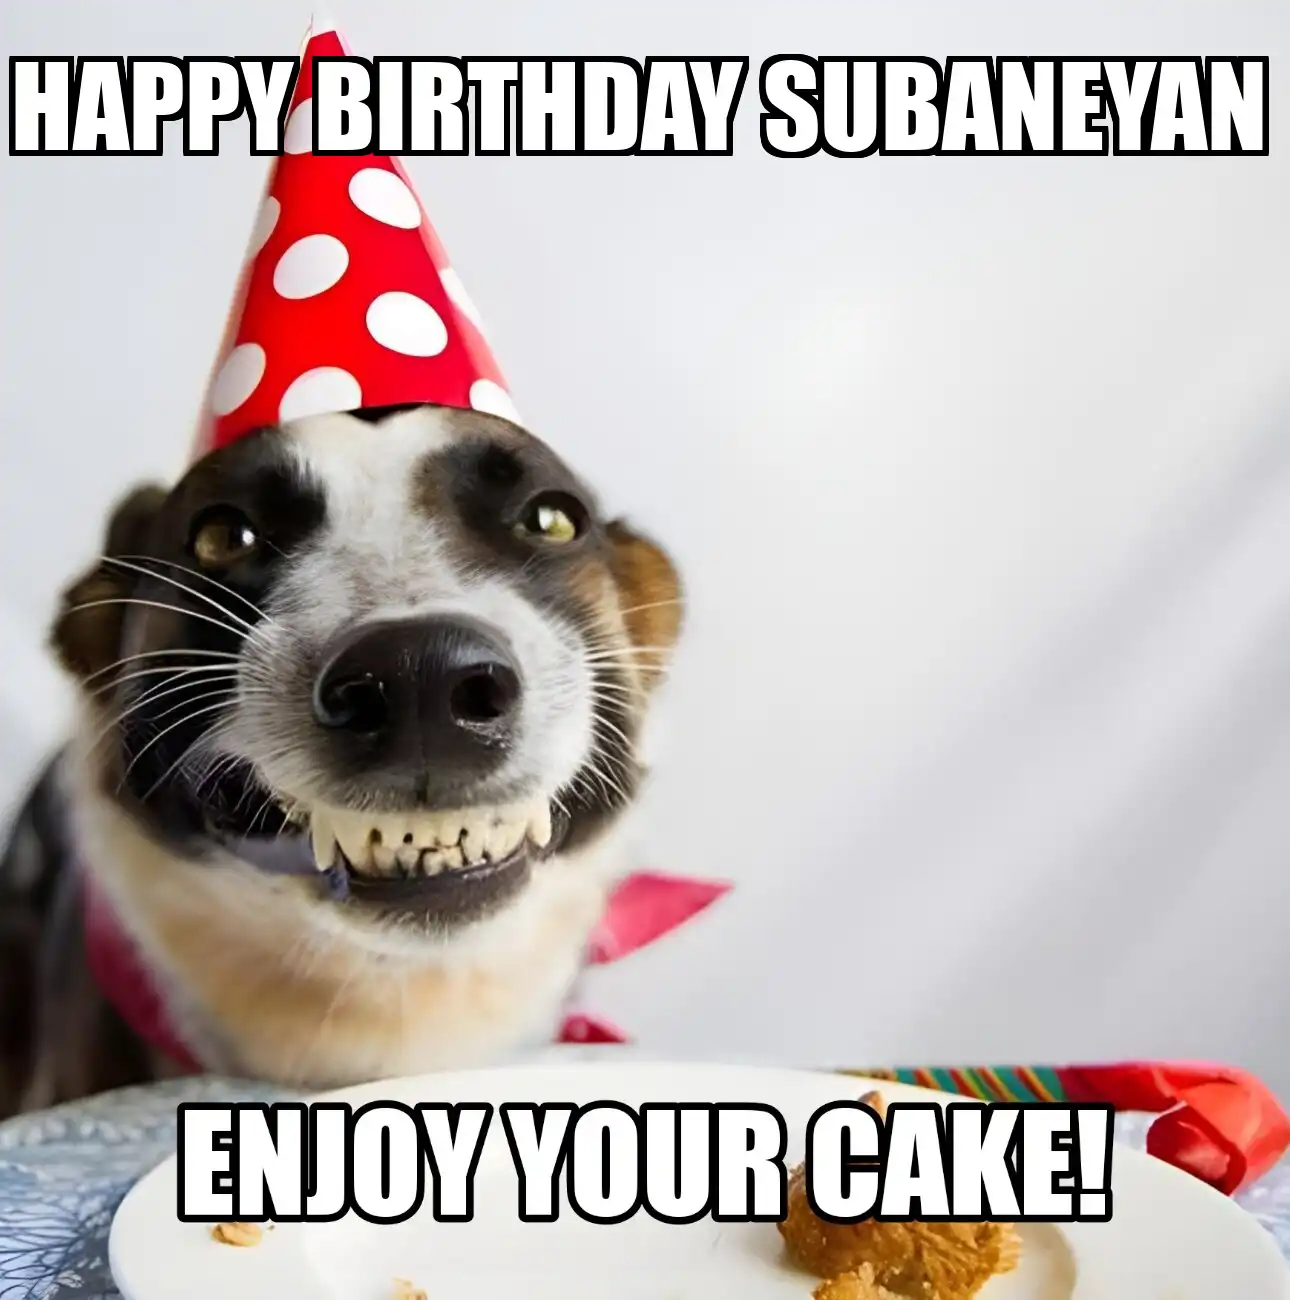 Happy Birthday Subaneyan Enjoy Your Cake Dog Meme